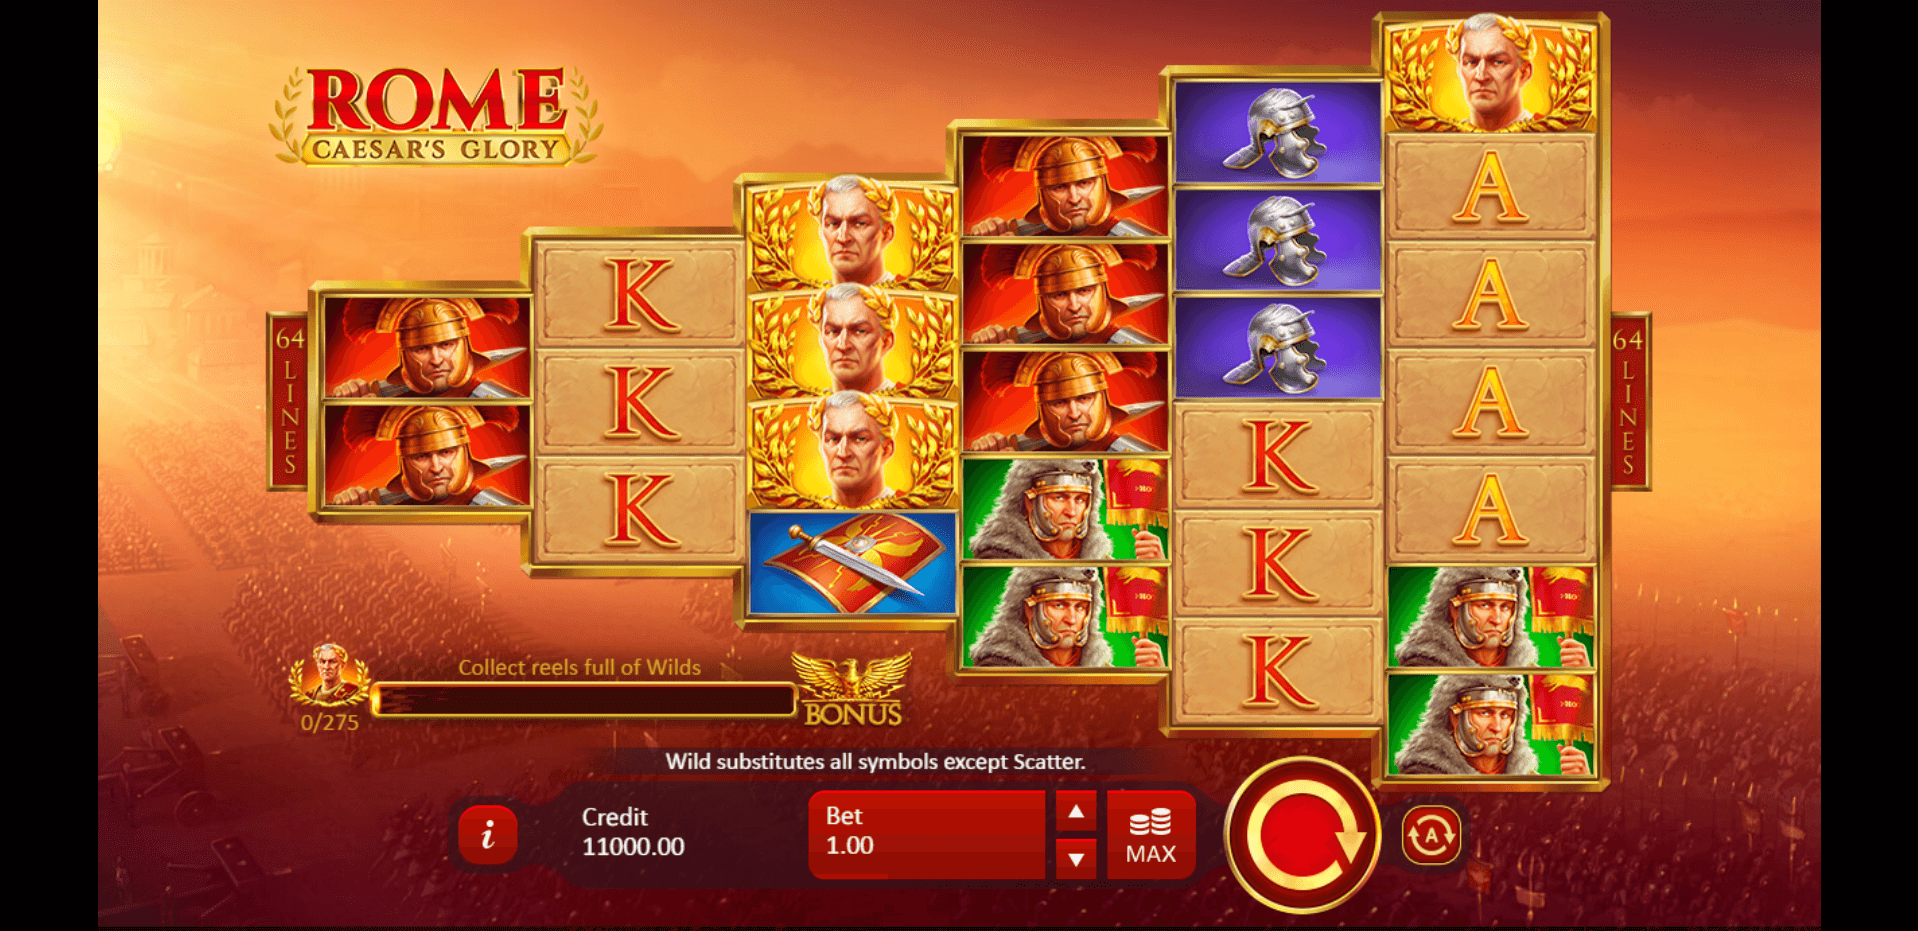 Rome Caesars Glory Slot Machine u15ce Play FREE Casino Game Online by Playson